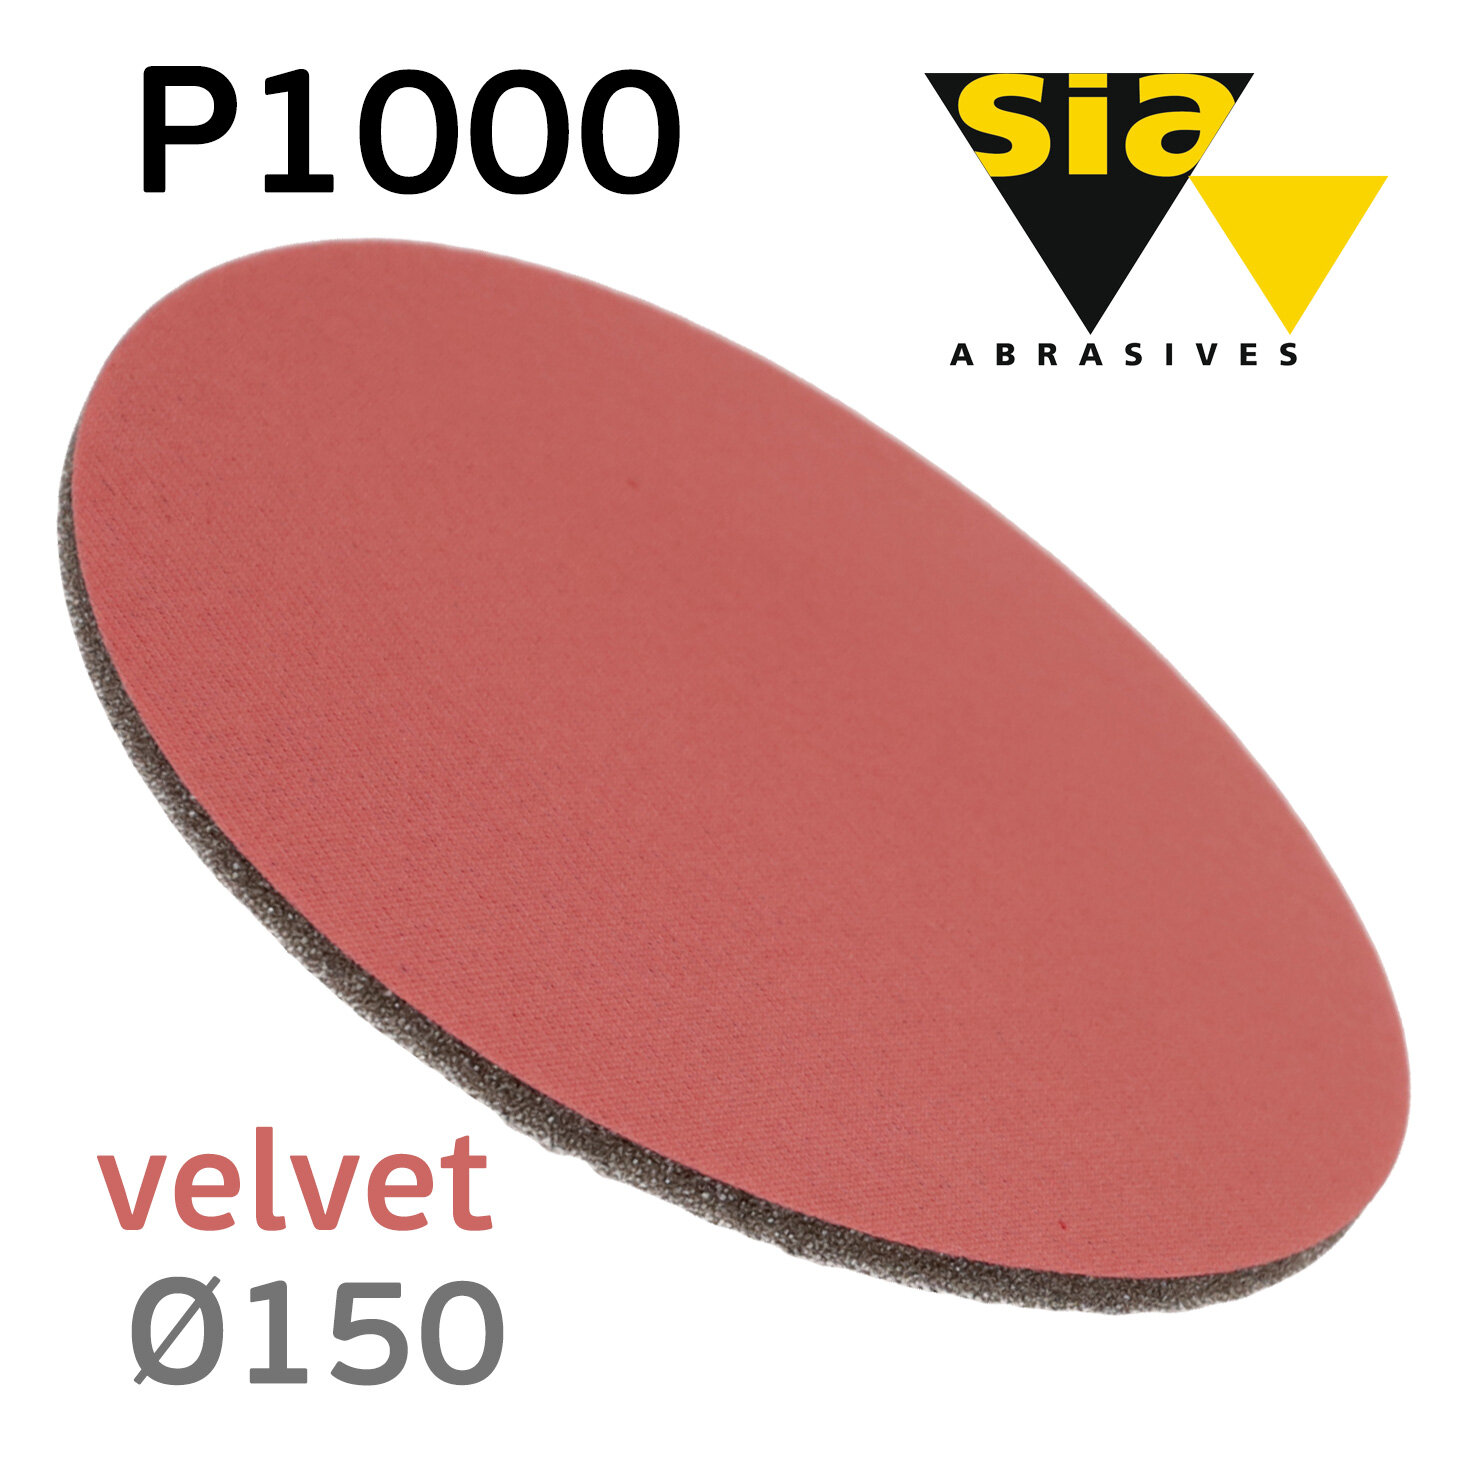 Абразивный диск на поролоне SIA velvet Р1000 (150мм) с липучкой